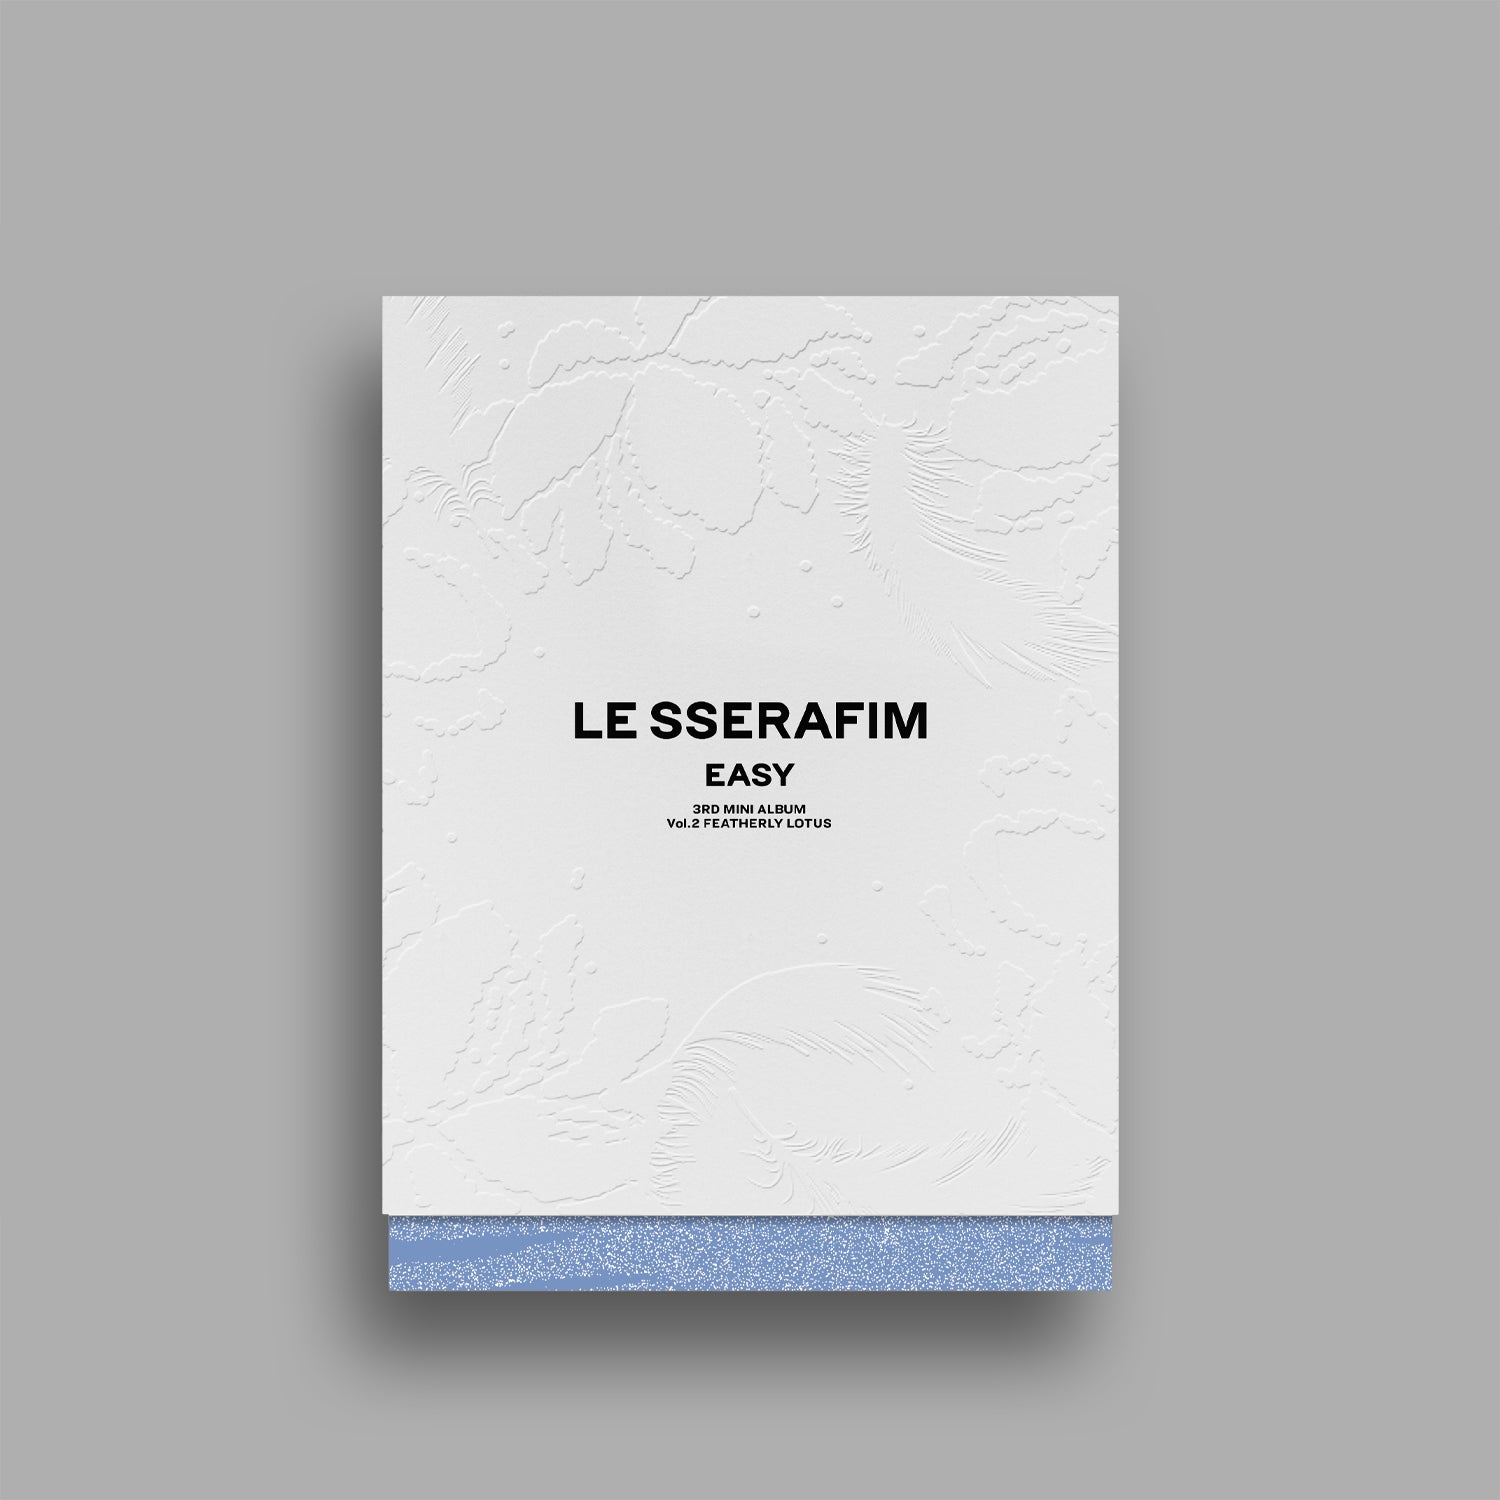 LE SSERAFIM 3RD MINI ALBUM 'EASY' FEATHERLY LOTUS VERSION COVER